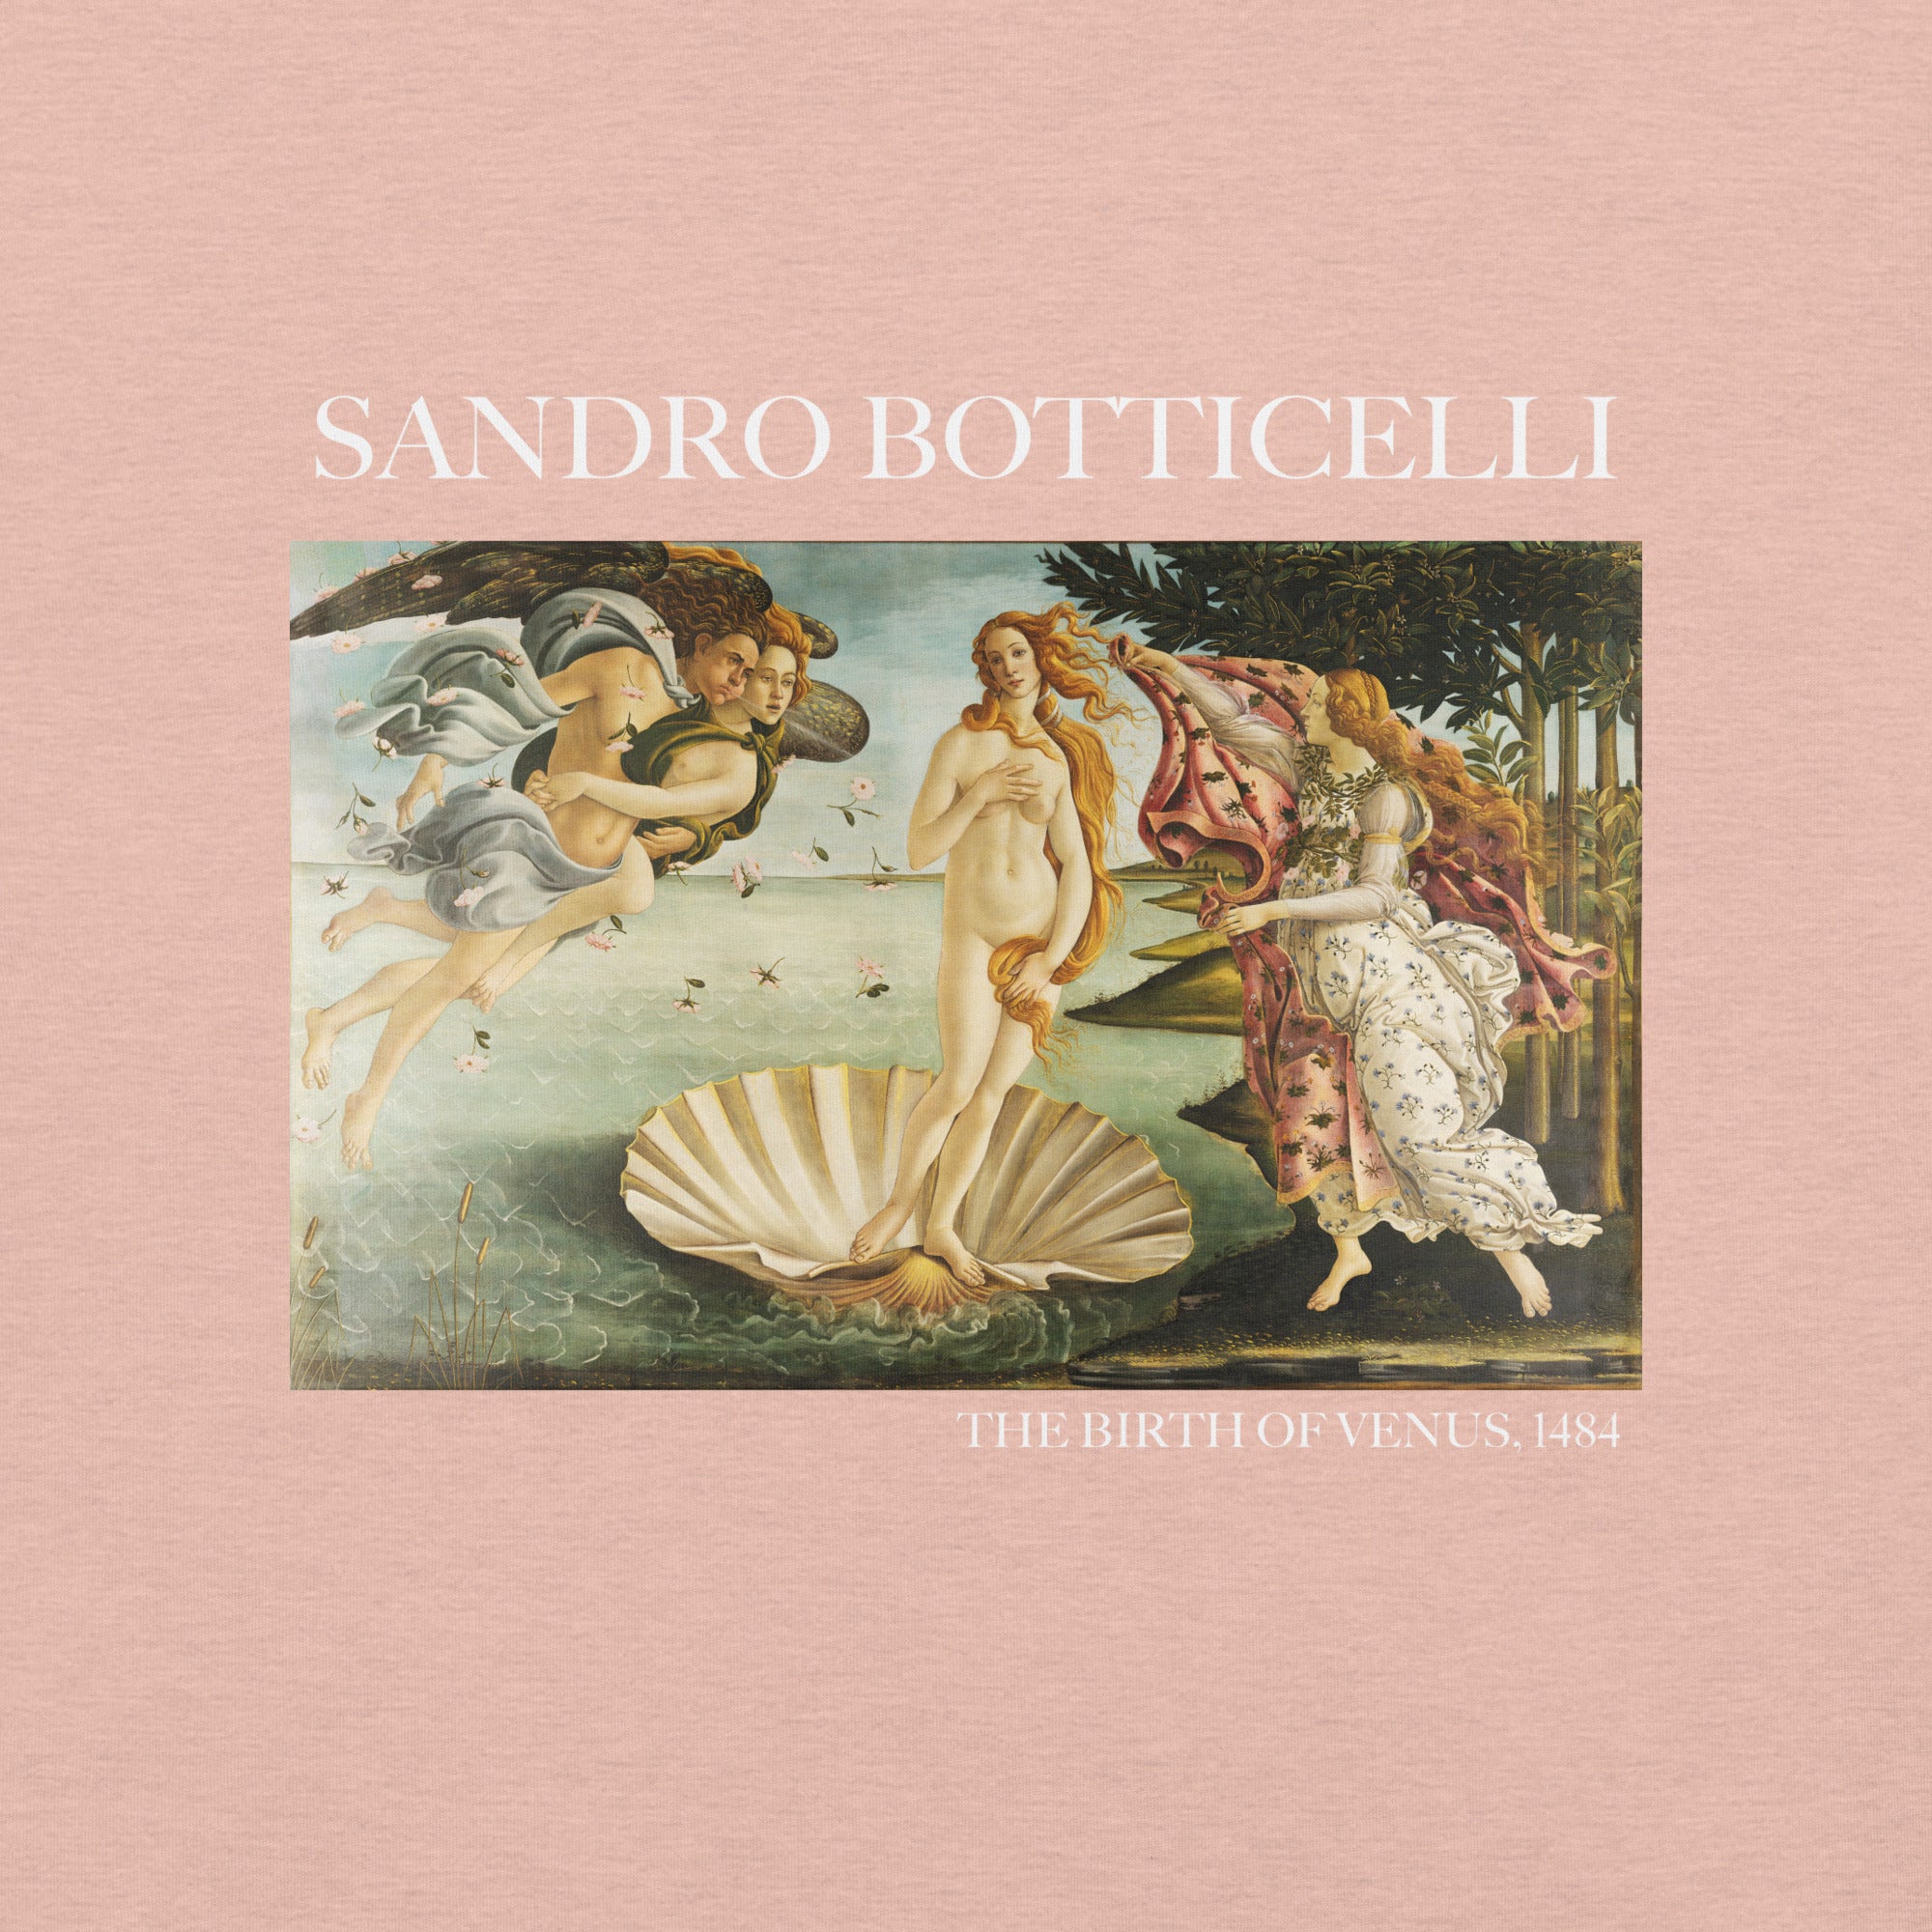 Sandro Botticelli 'The Birth of Venus' Famous Painting T-Shirt | Unisex Classic Art Tee